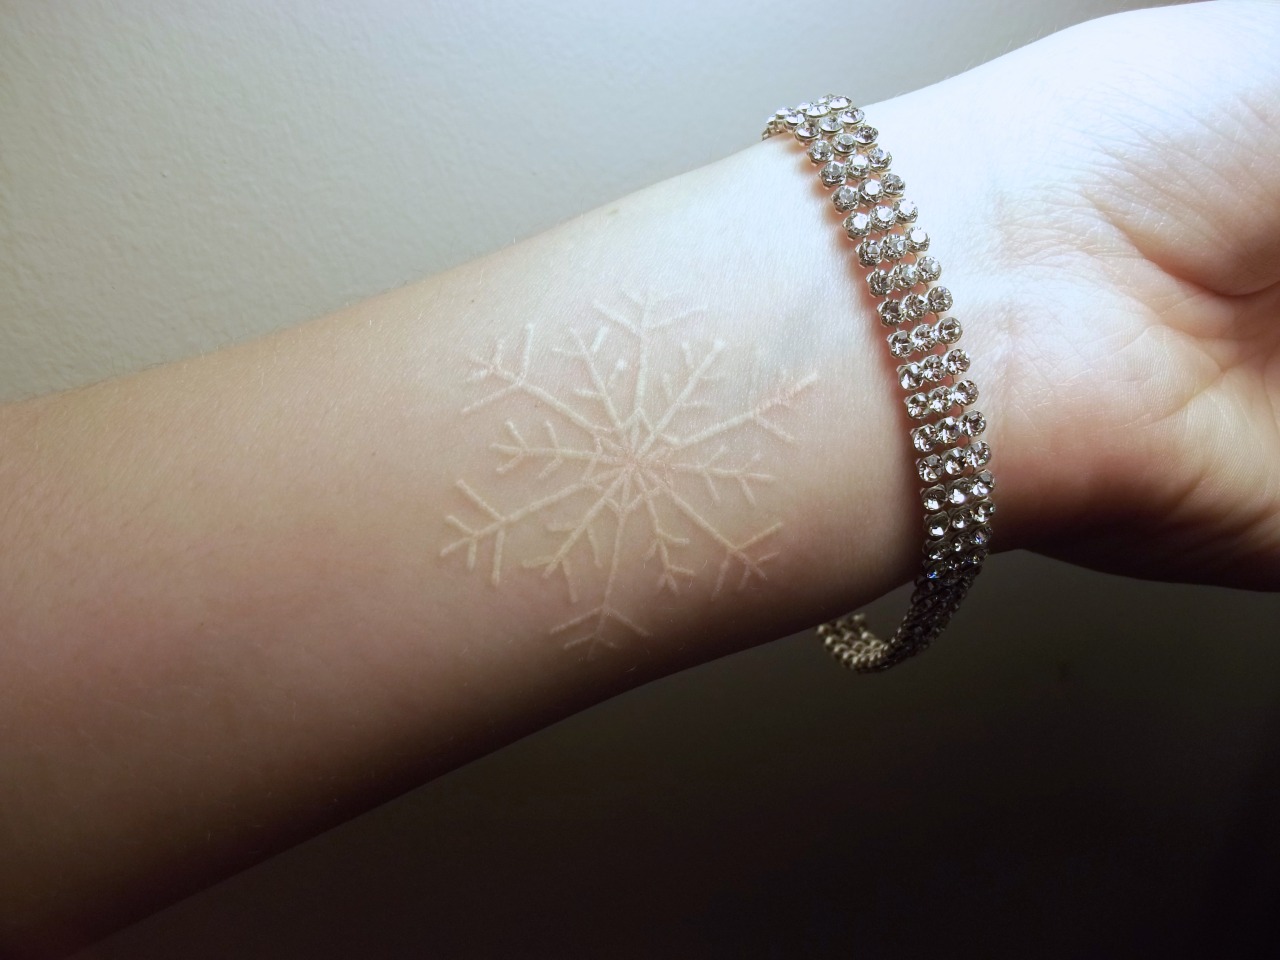 Nikka Dott Tattoos  White ink snowflakes  whiteink whitetattoo  snowflake snowflakes tattoo snowflaketattoo  فيسبوك